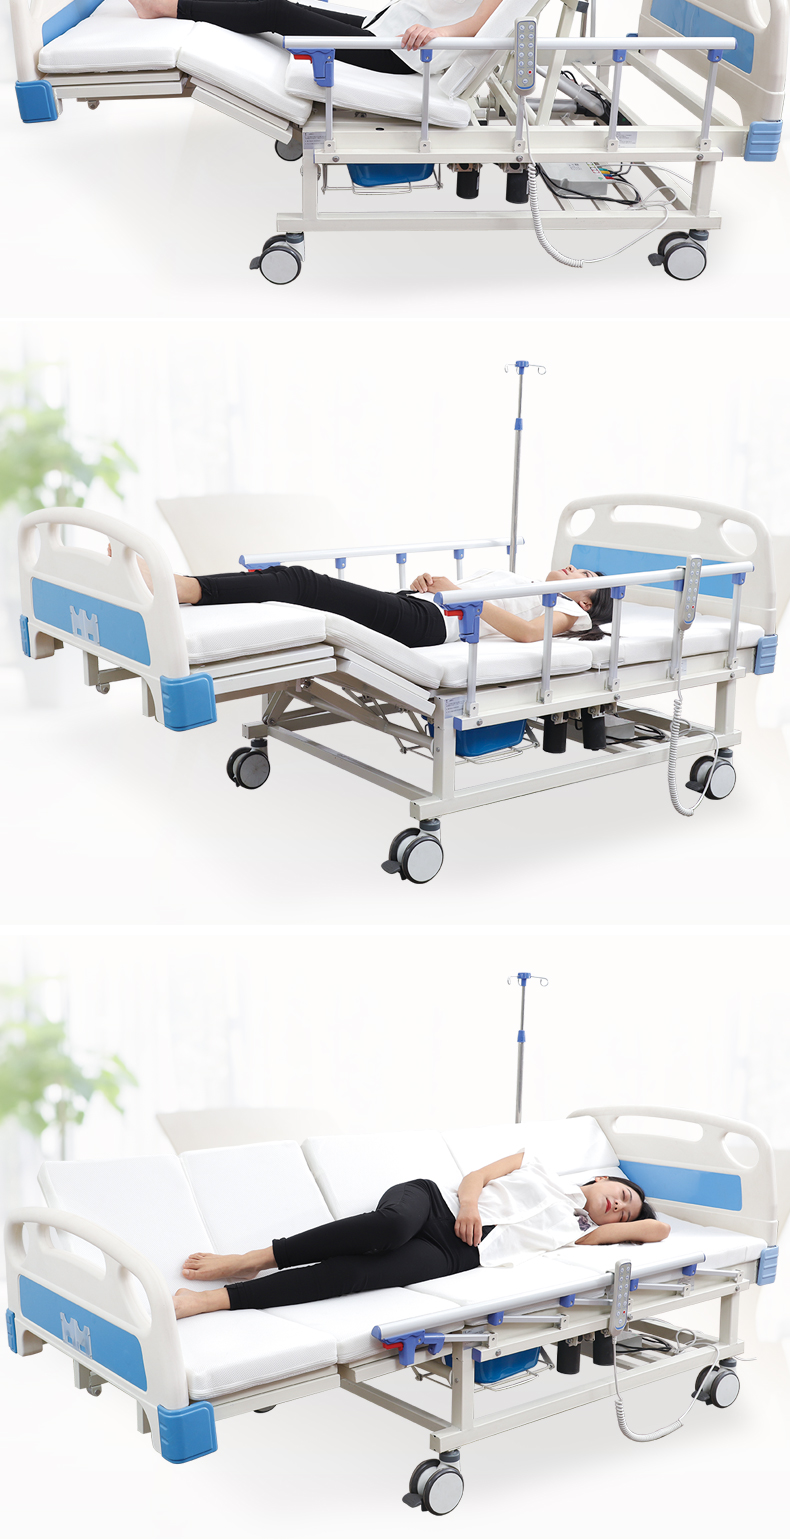 rental hospital beds for home use